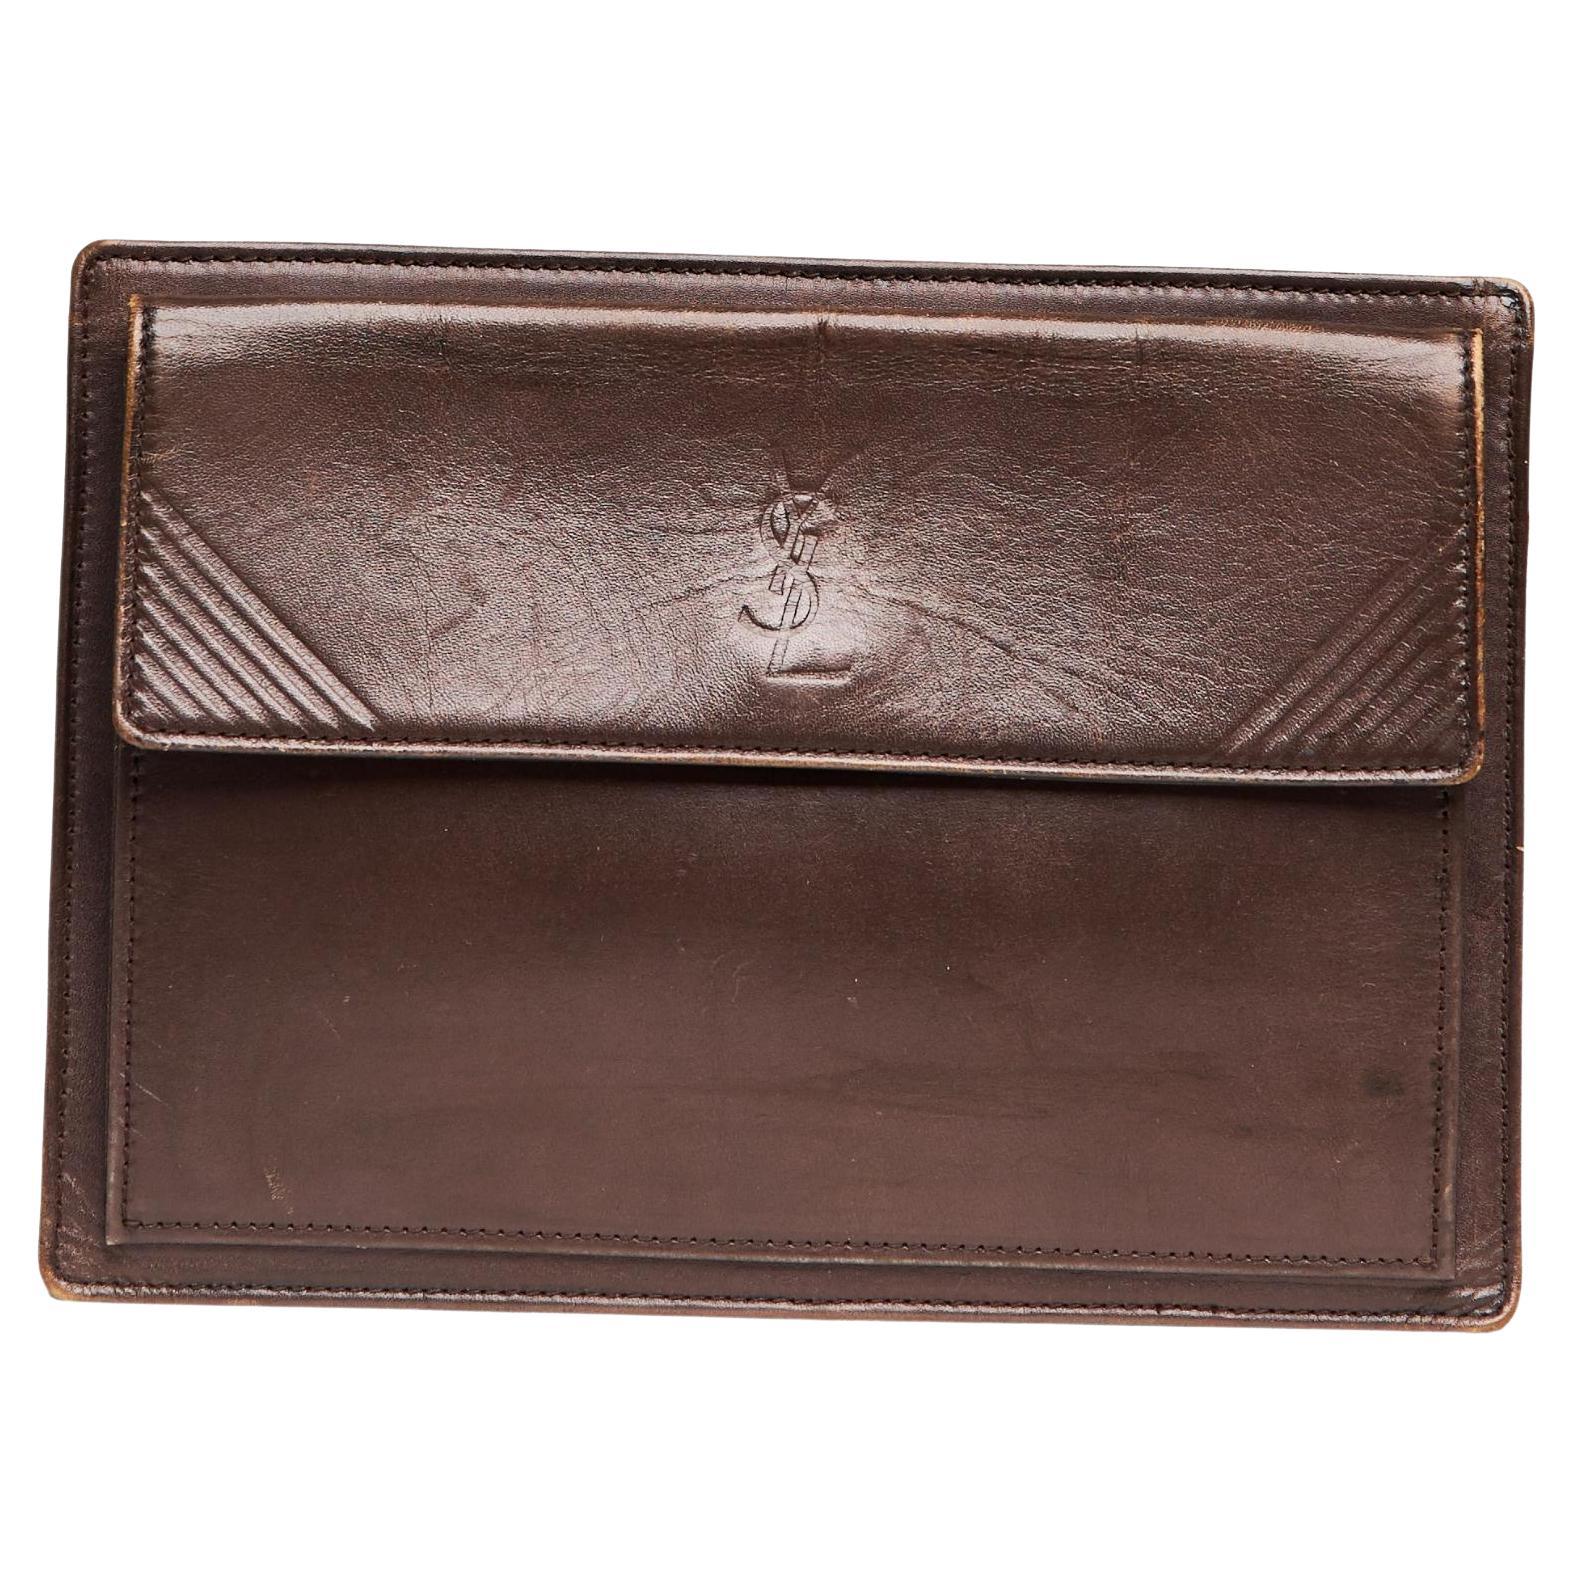 Yves Saint Laurent Vintage Chocolate Leather Clutch